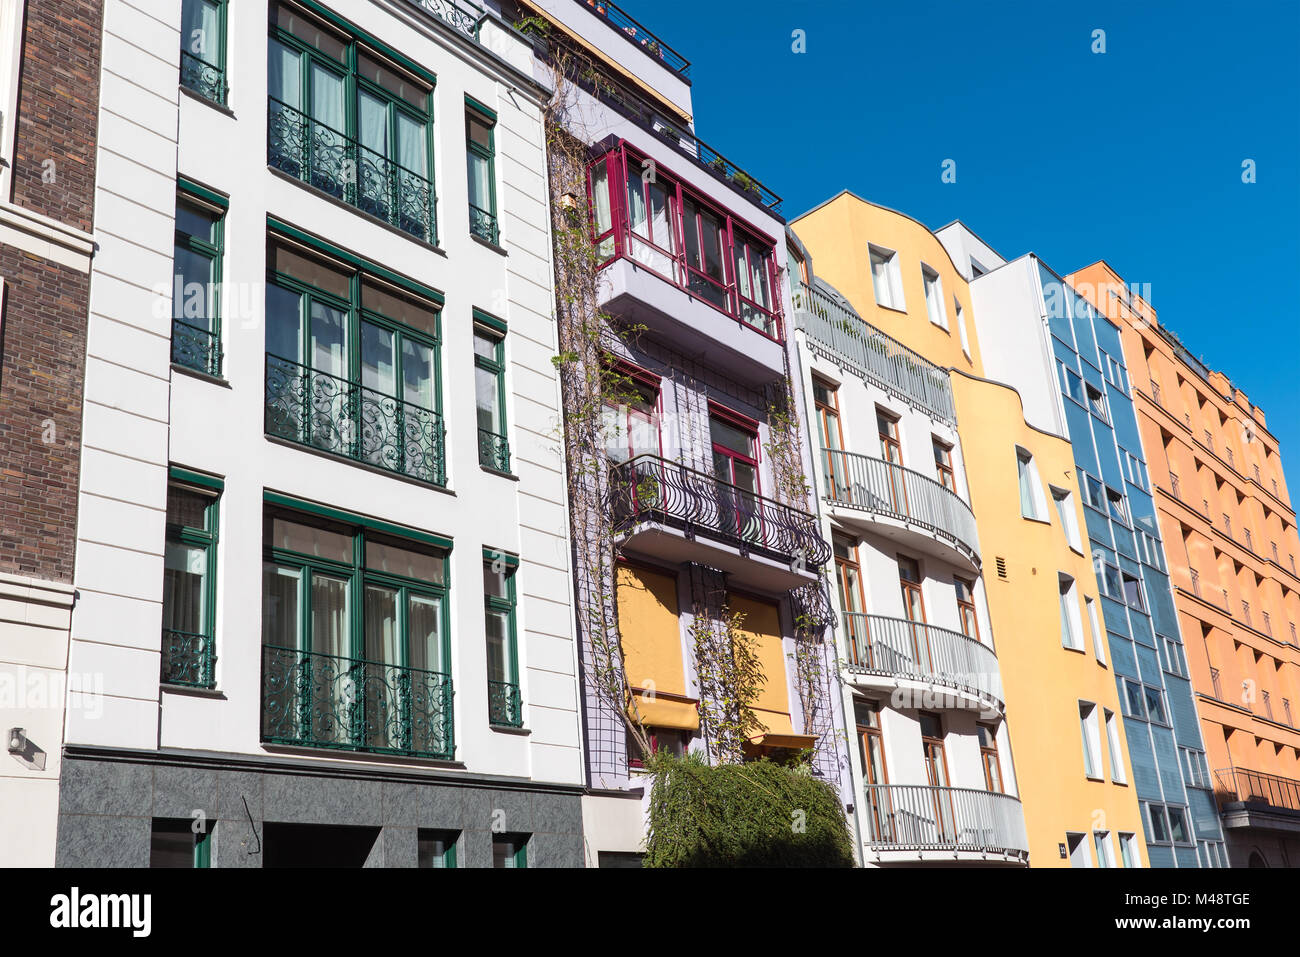 Hilera de casas coloridas visto en Berlín. Foto de stock